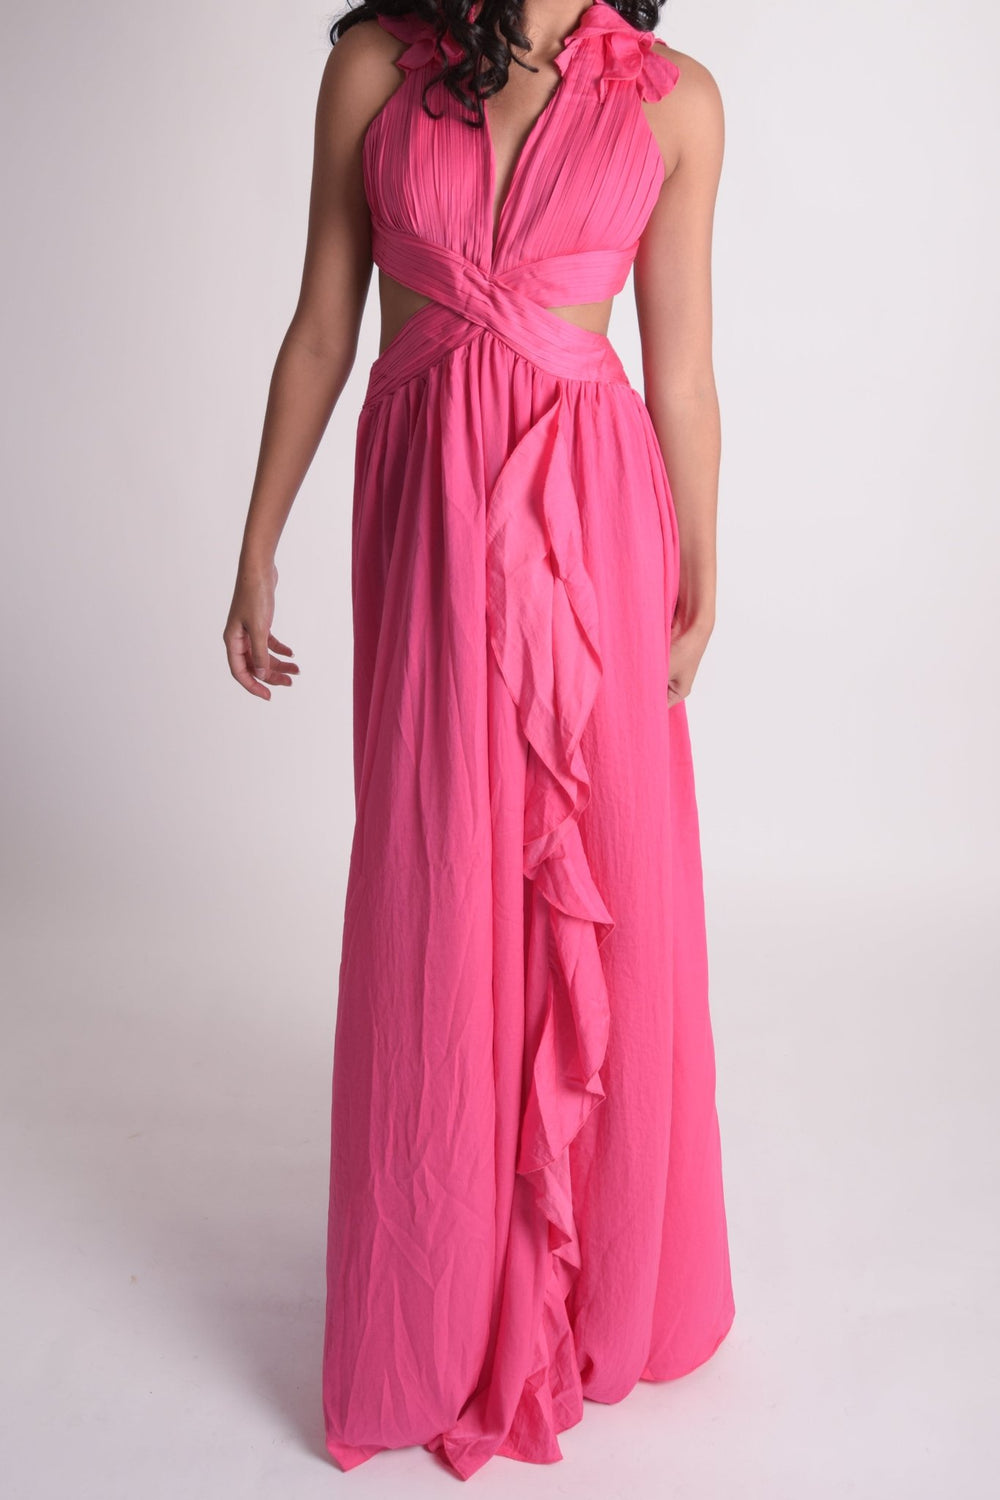 Emory - rosa - Lend the Trend renta de vestidos mexico